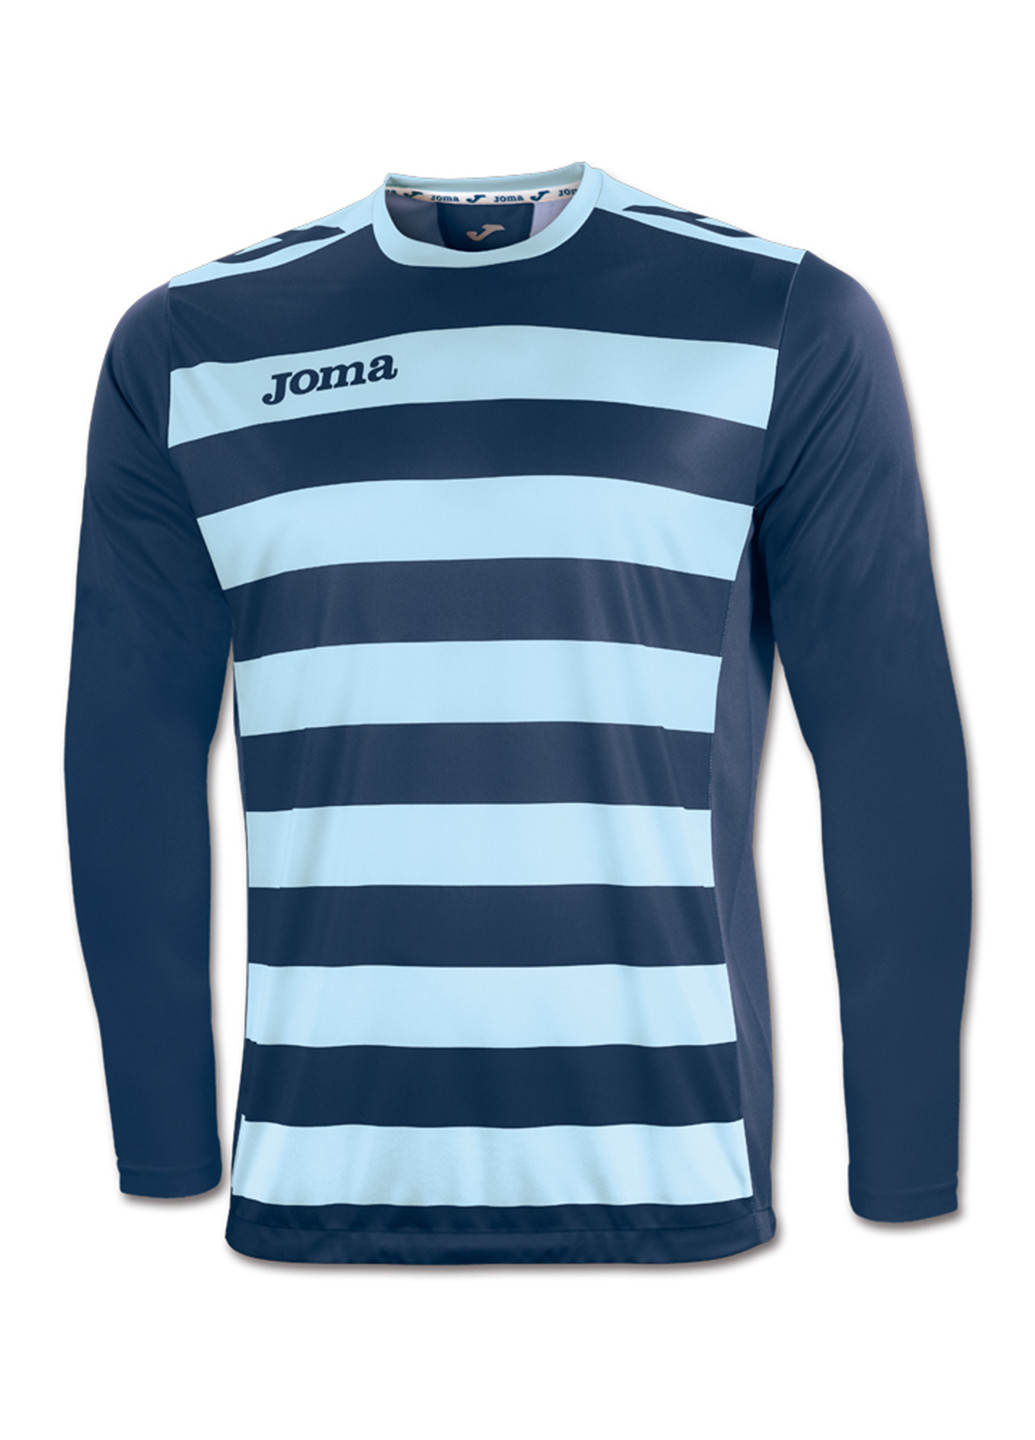 Темно-синий демисезонный спортивный лонгслив Joma с логотипом